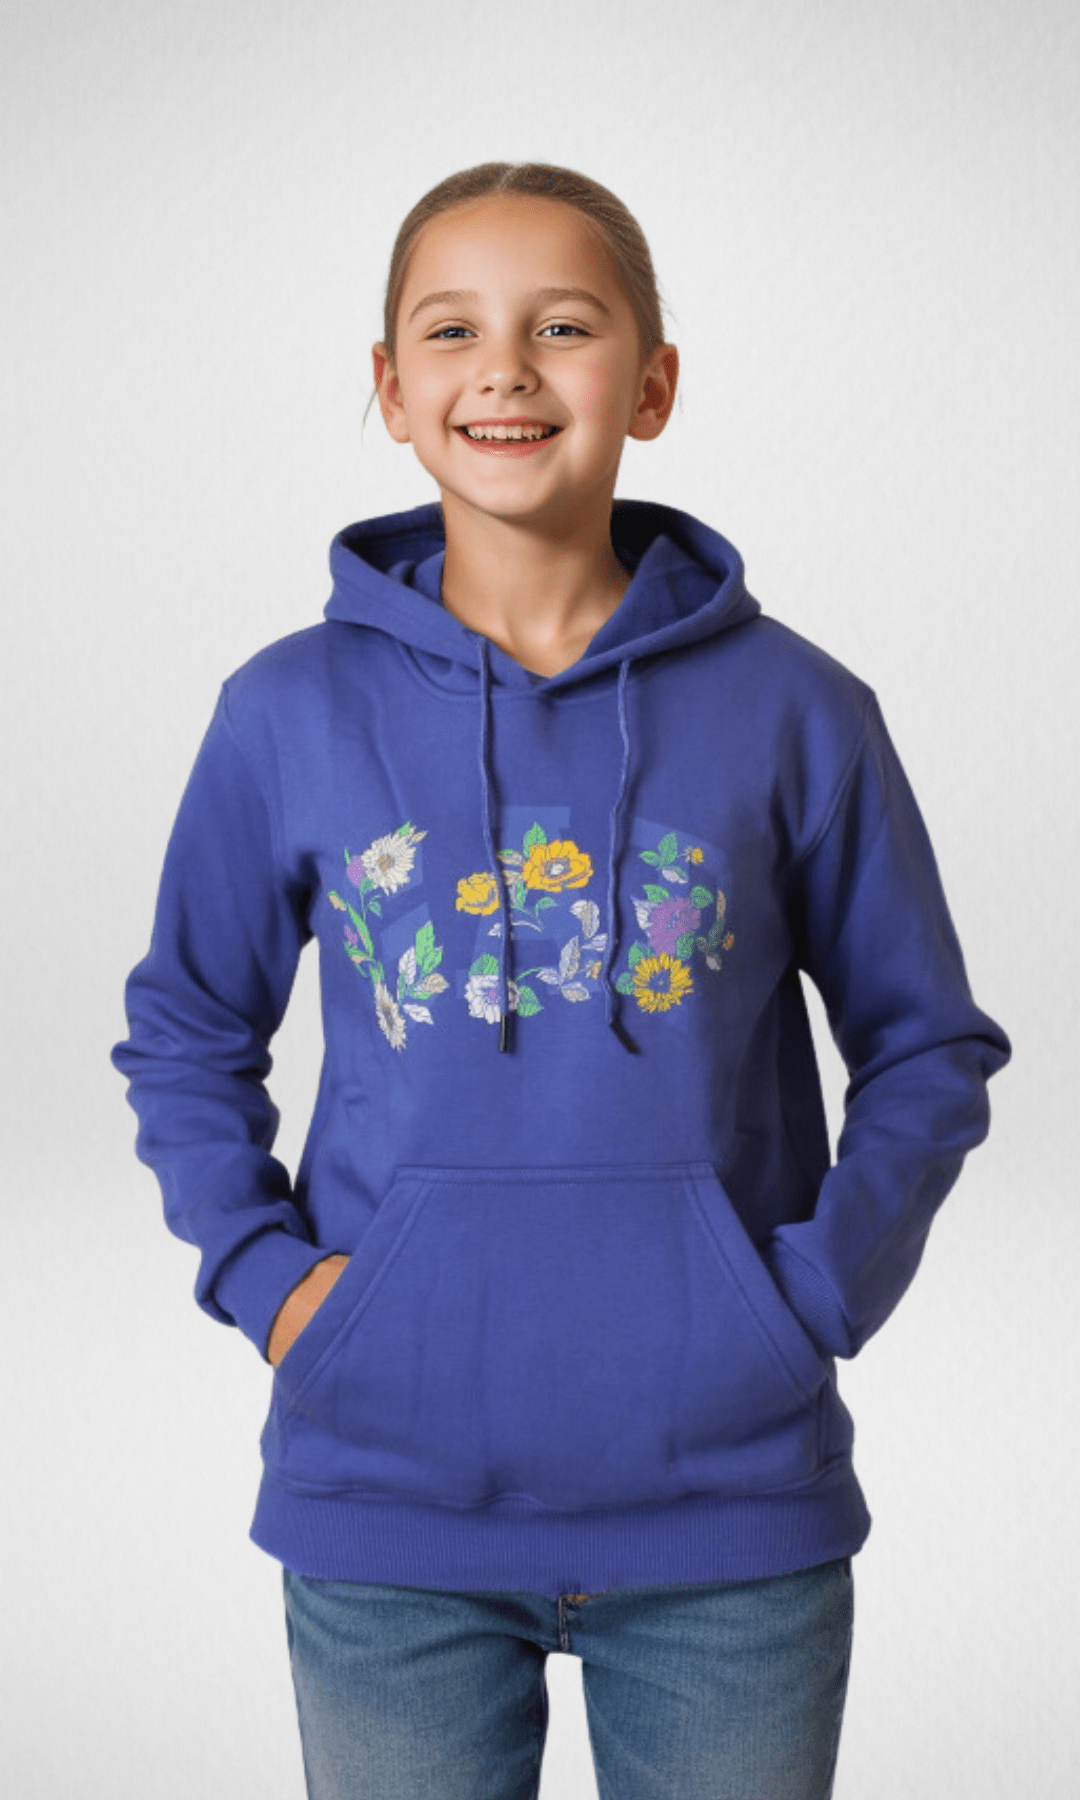 Kids Winter 24 Kids Sweatshirt Kids New Hoodie With Flower Logo - Blue